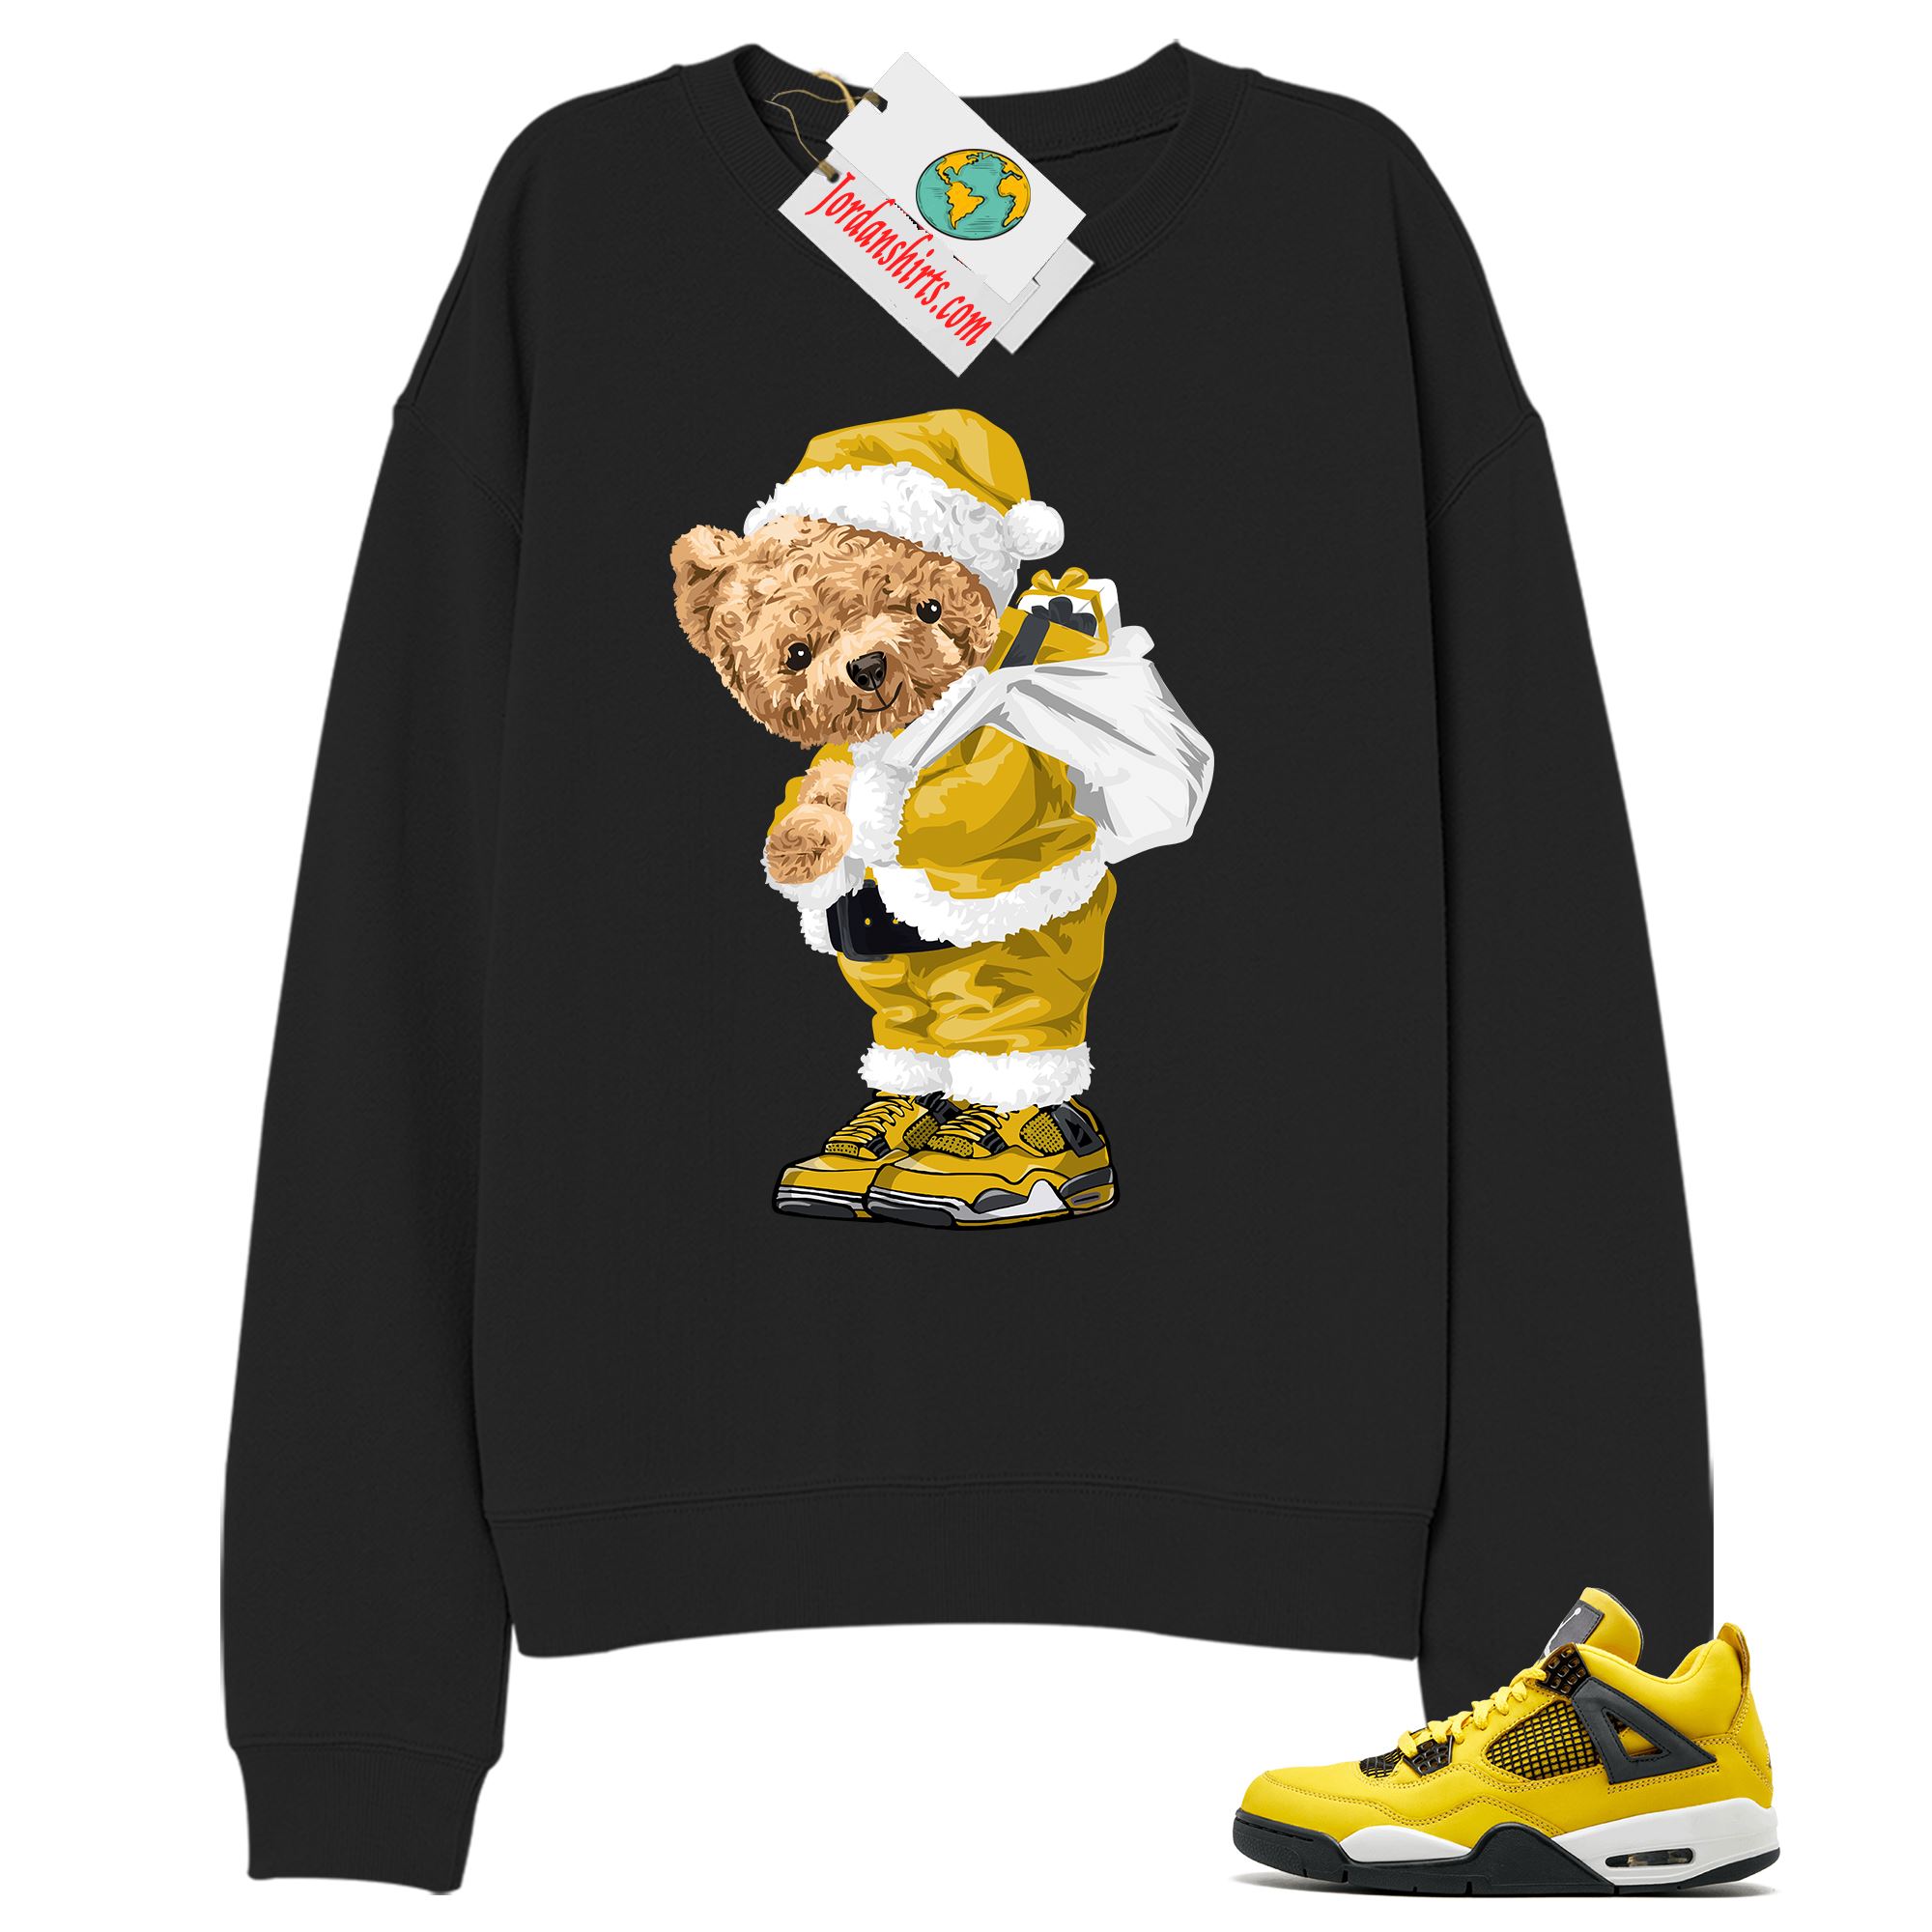 Jordan 4 Sweatshirt, Teddy Bear In Santa Claus Black Sweatshirt Air Jordan 4 Tour Yellow Lightning 4s Full Size Up To 5xl